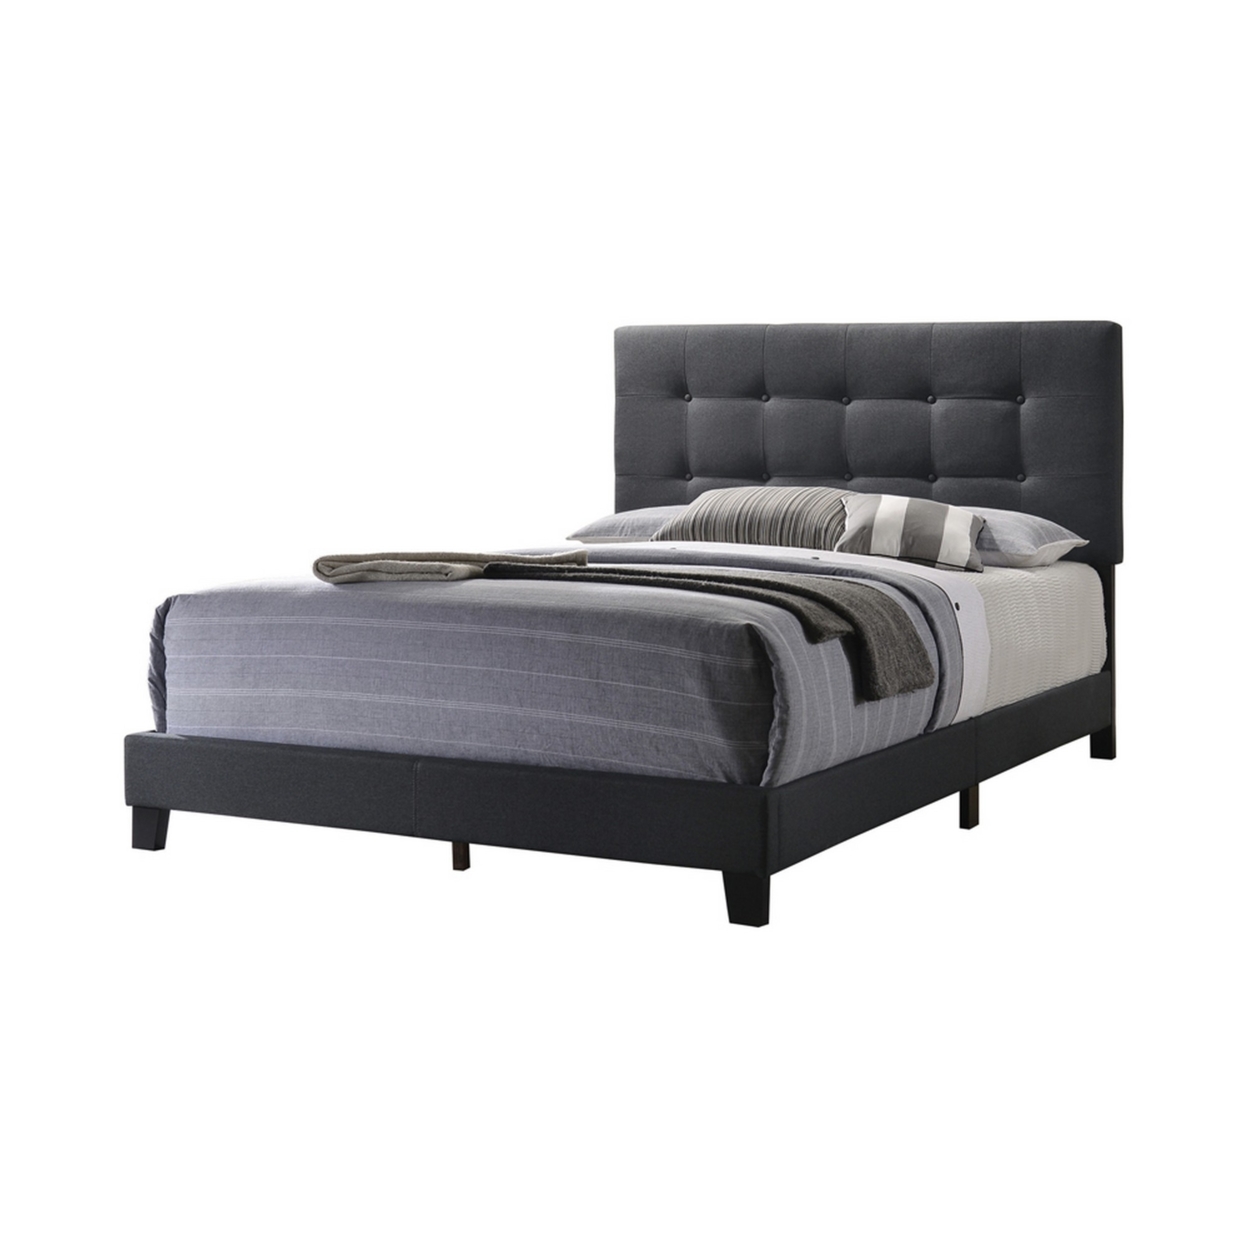 Full Size Bed With Square Button Tufted Headboard, Dark Gray- Saltoro Sherpi